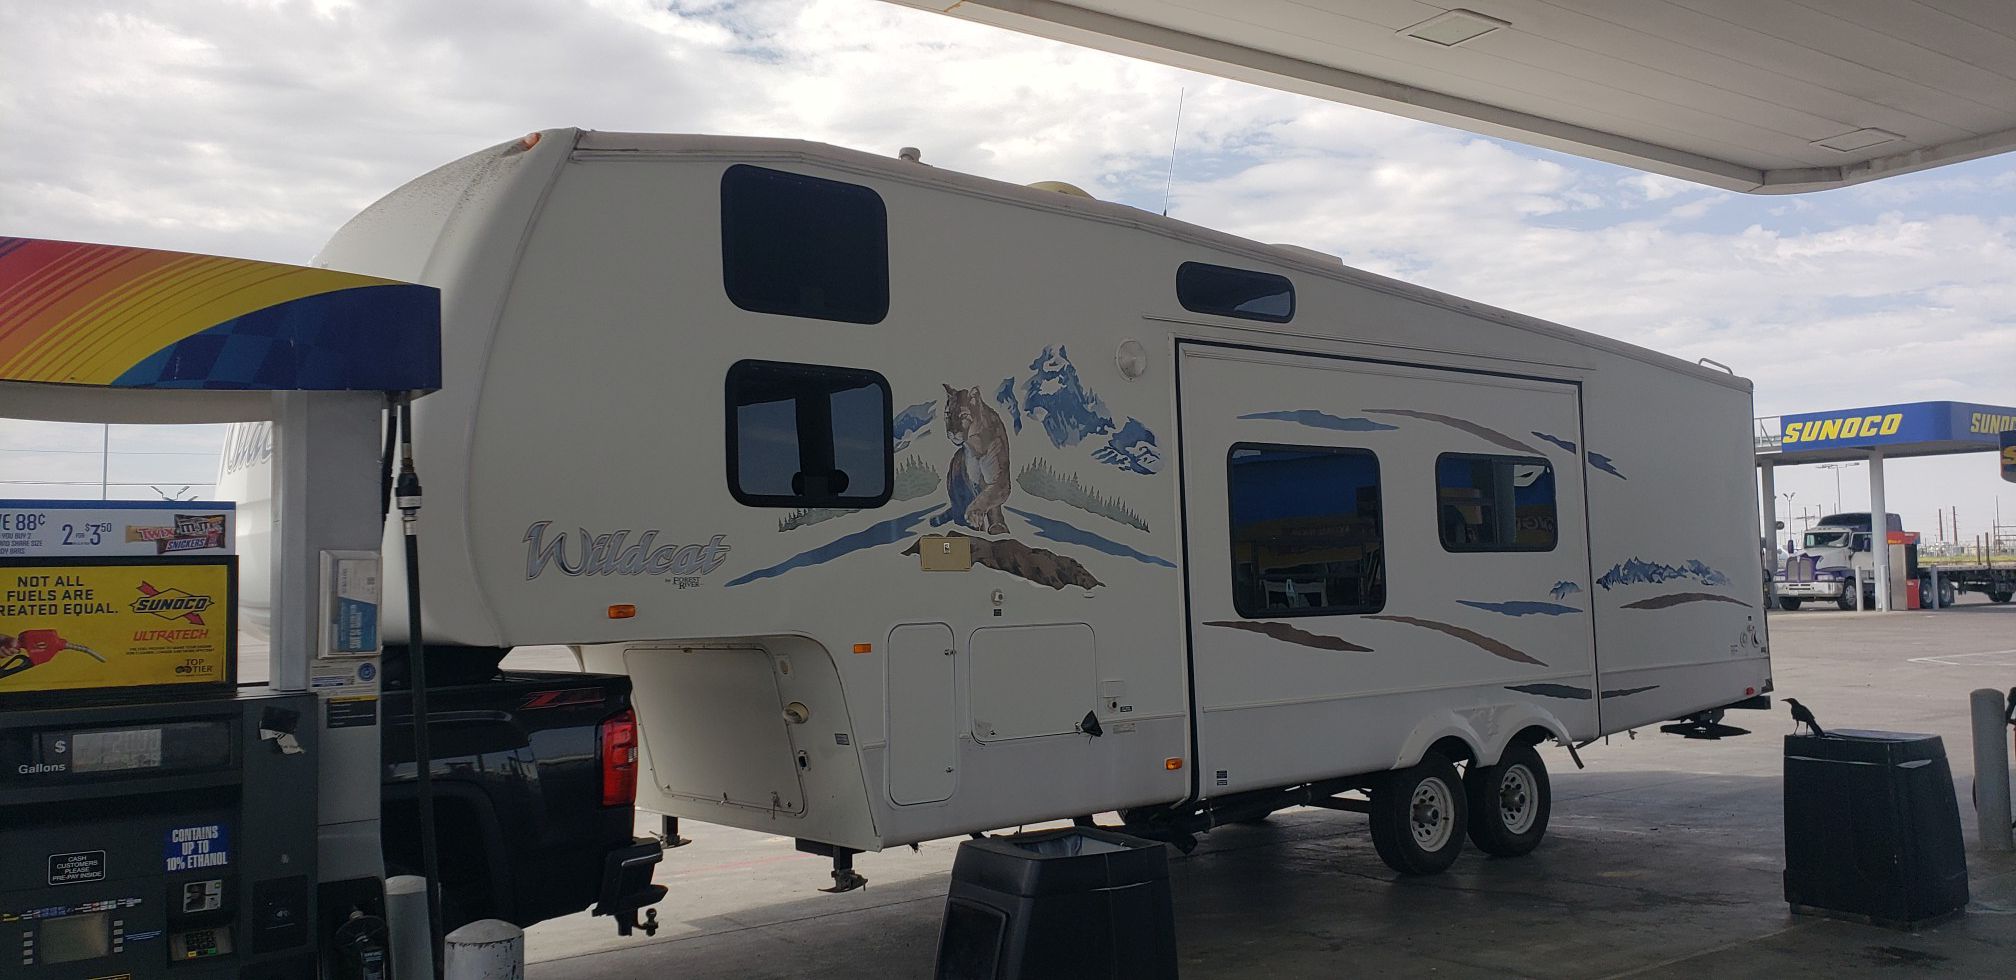 RV camper trailer